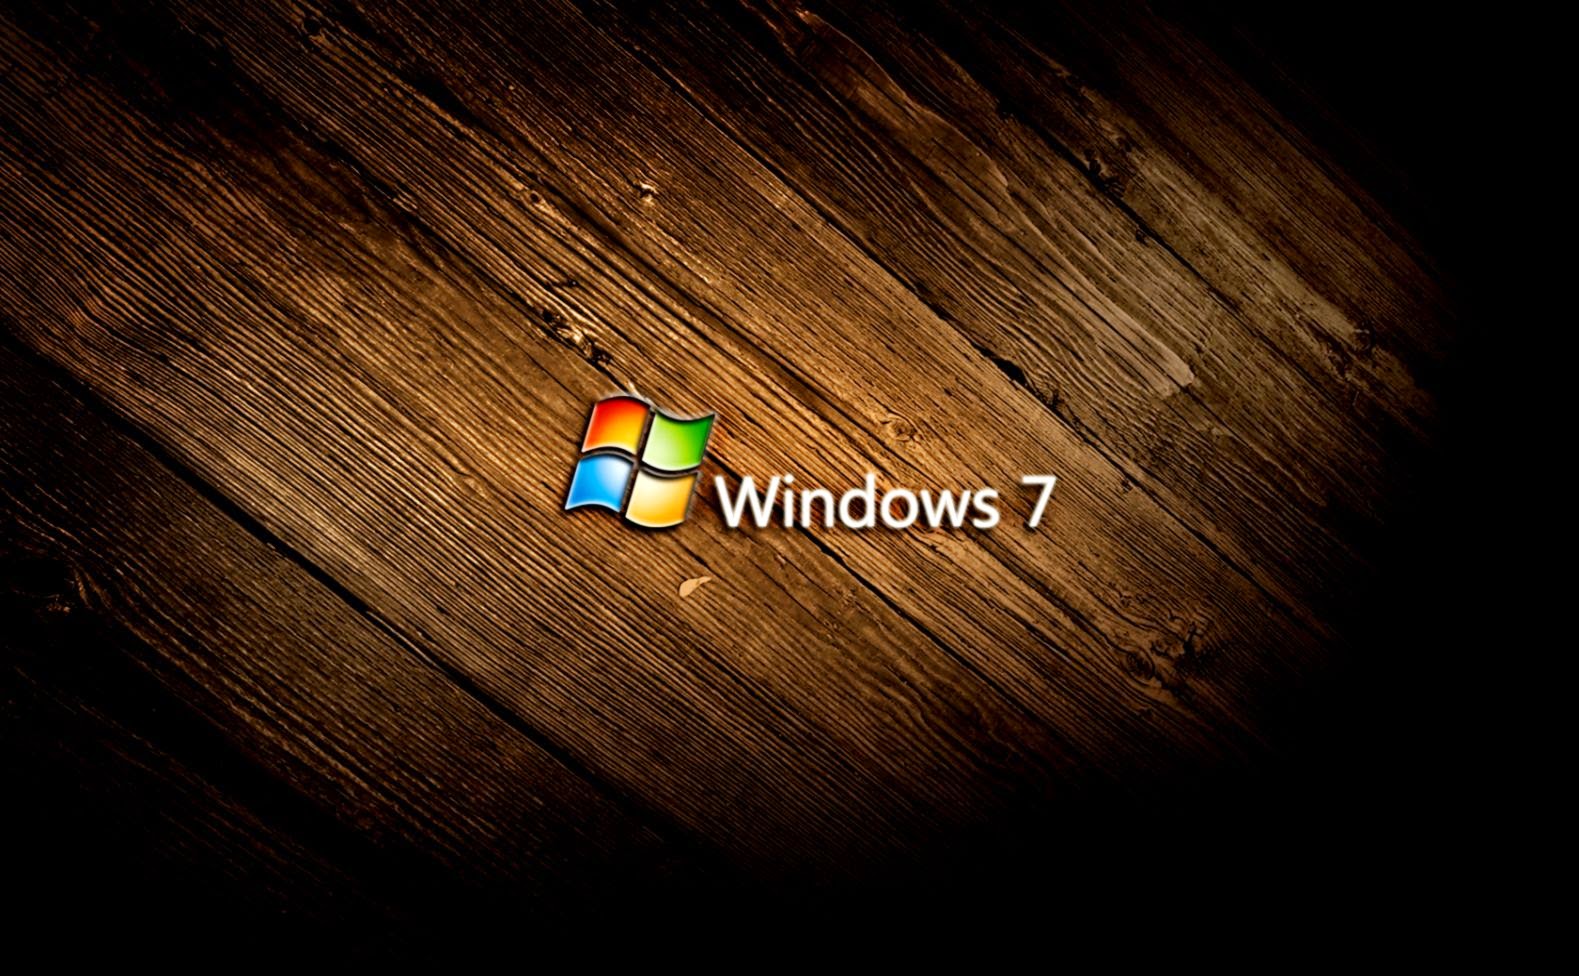 Cool Windows 7 Wallpapers Hd